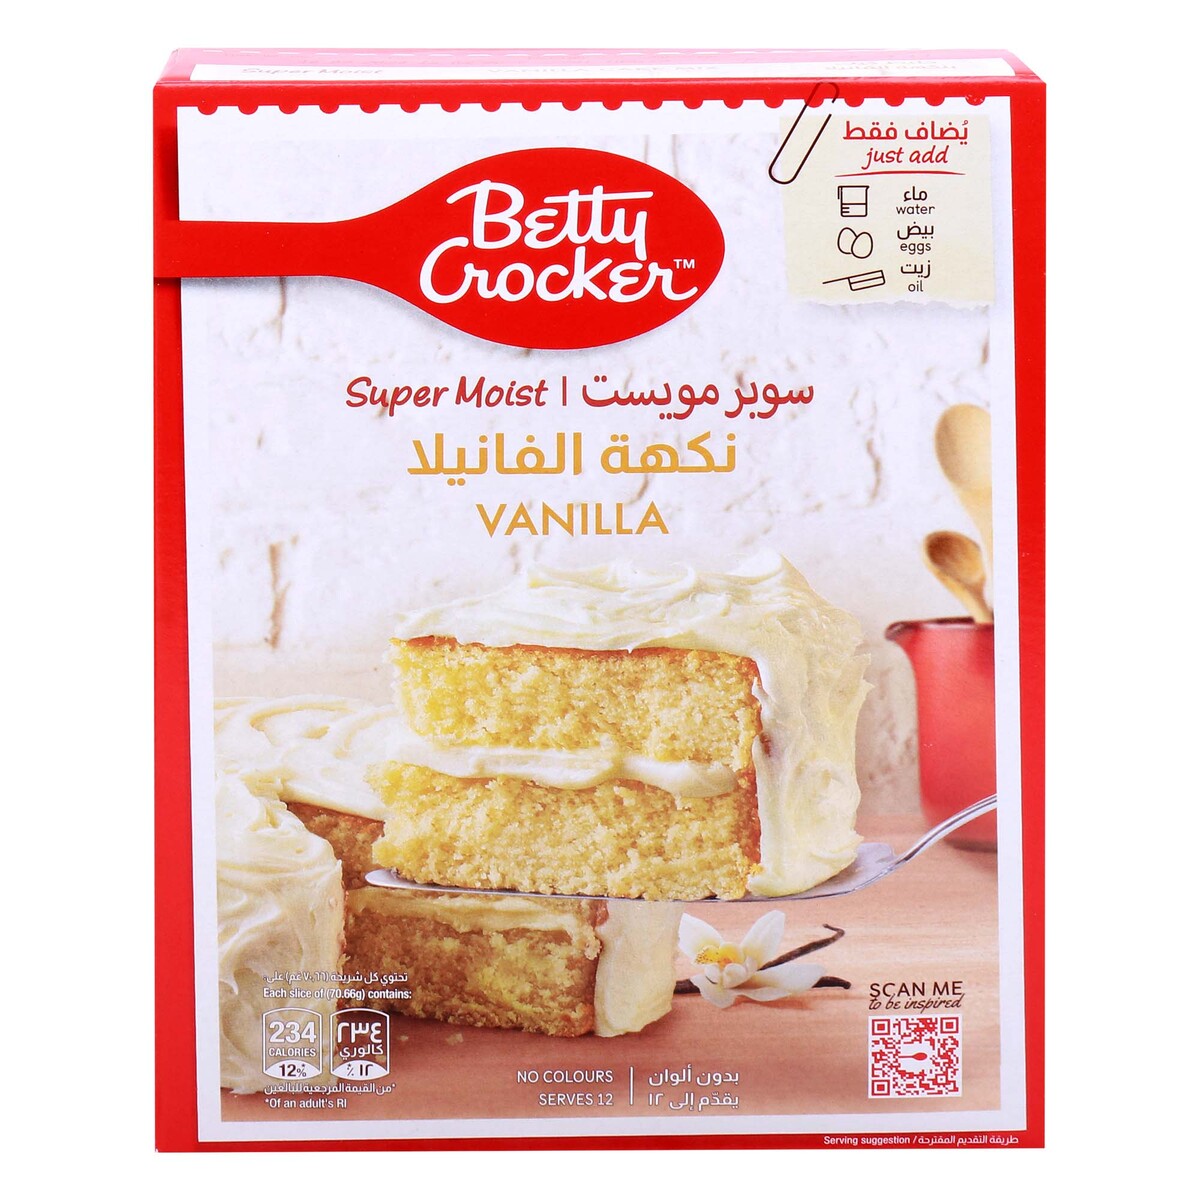 Betty Crocker Super Moist Supreme Vanilla Cake Mix 510 g